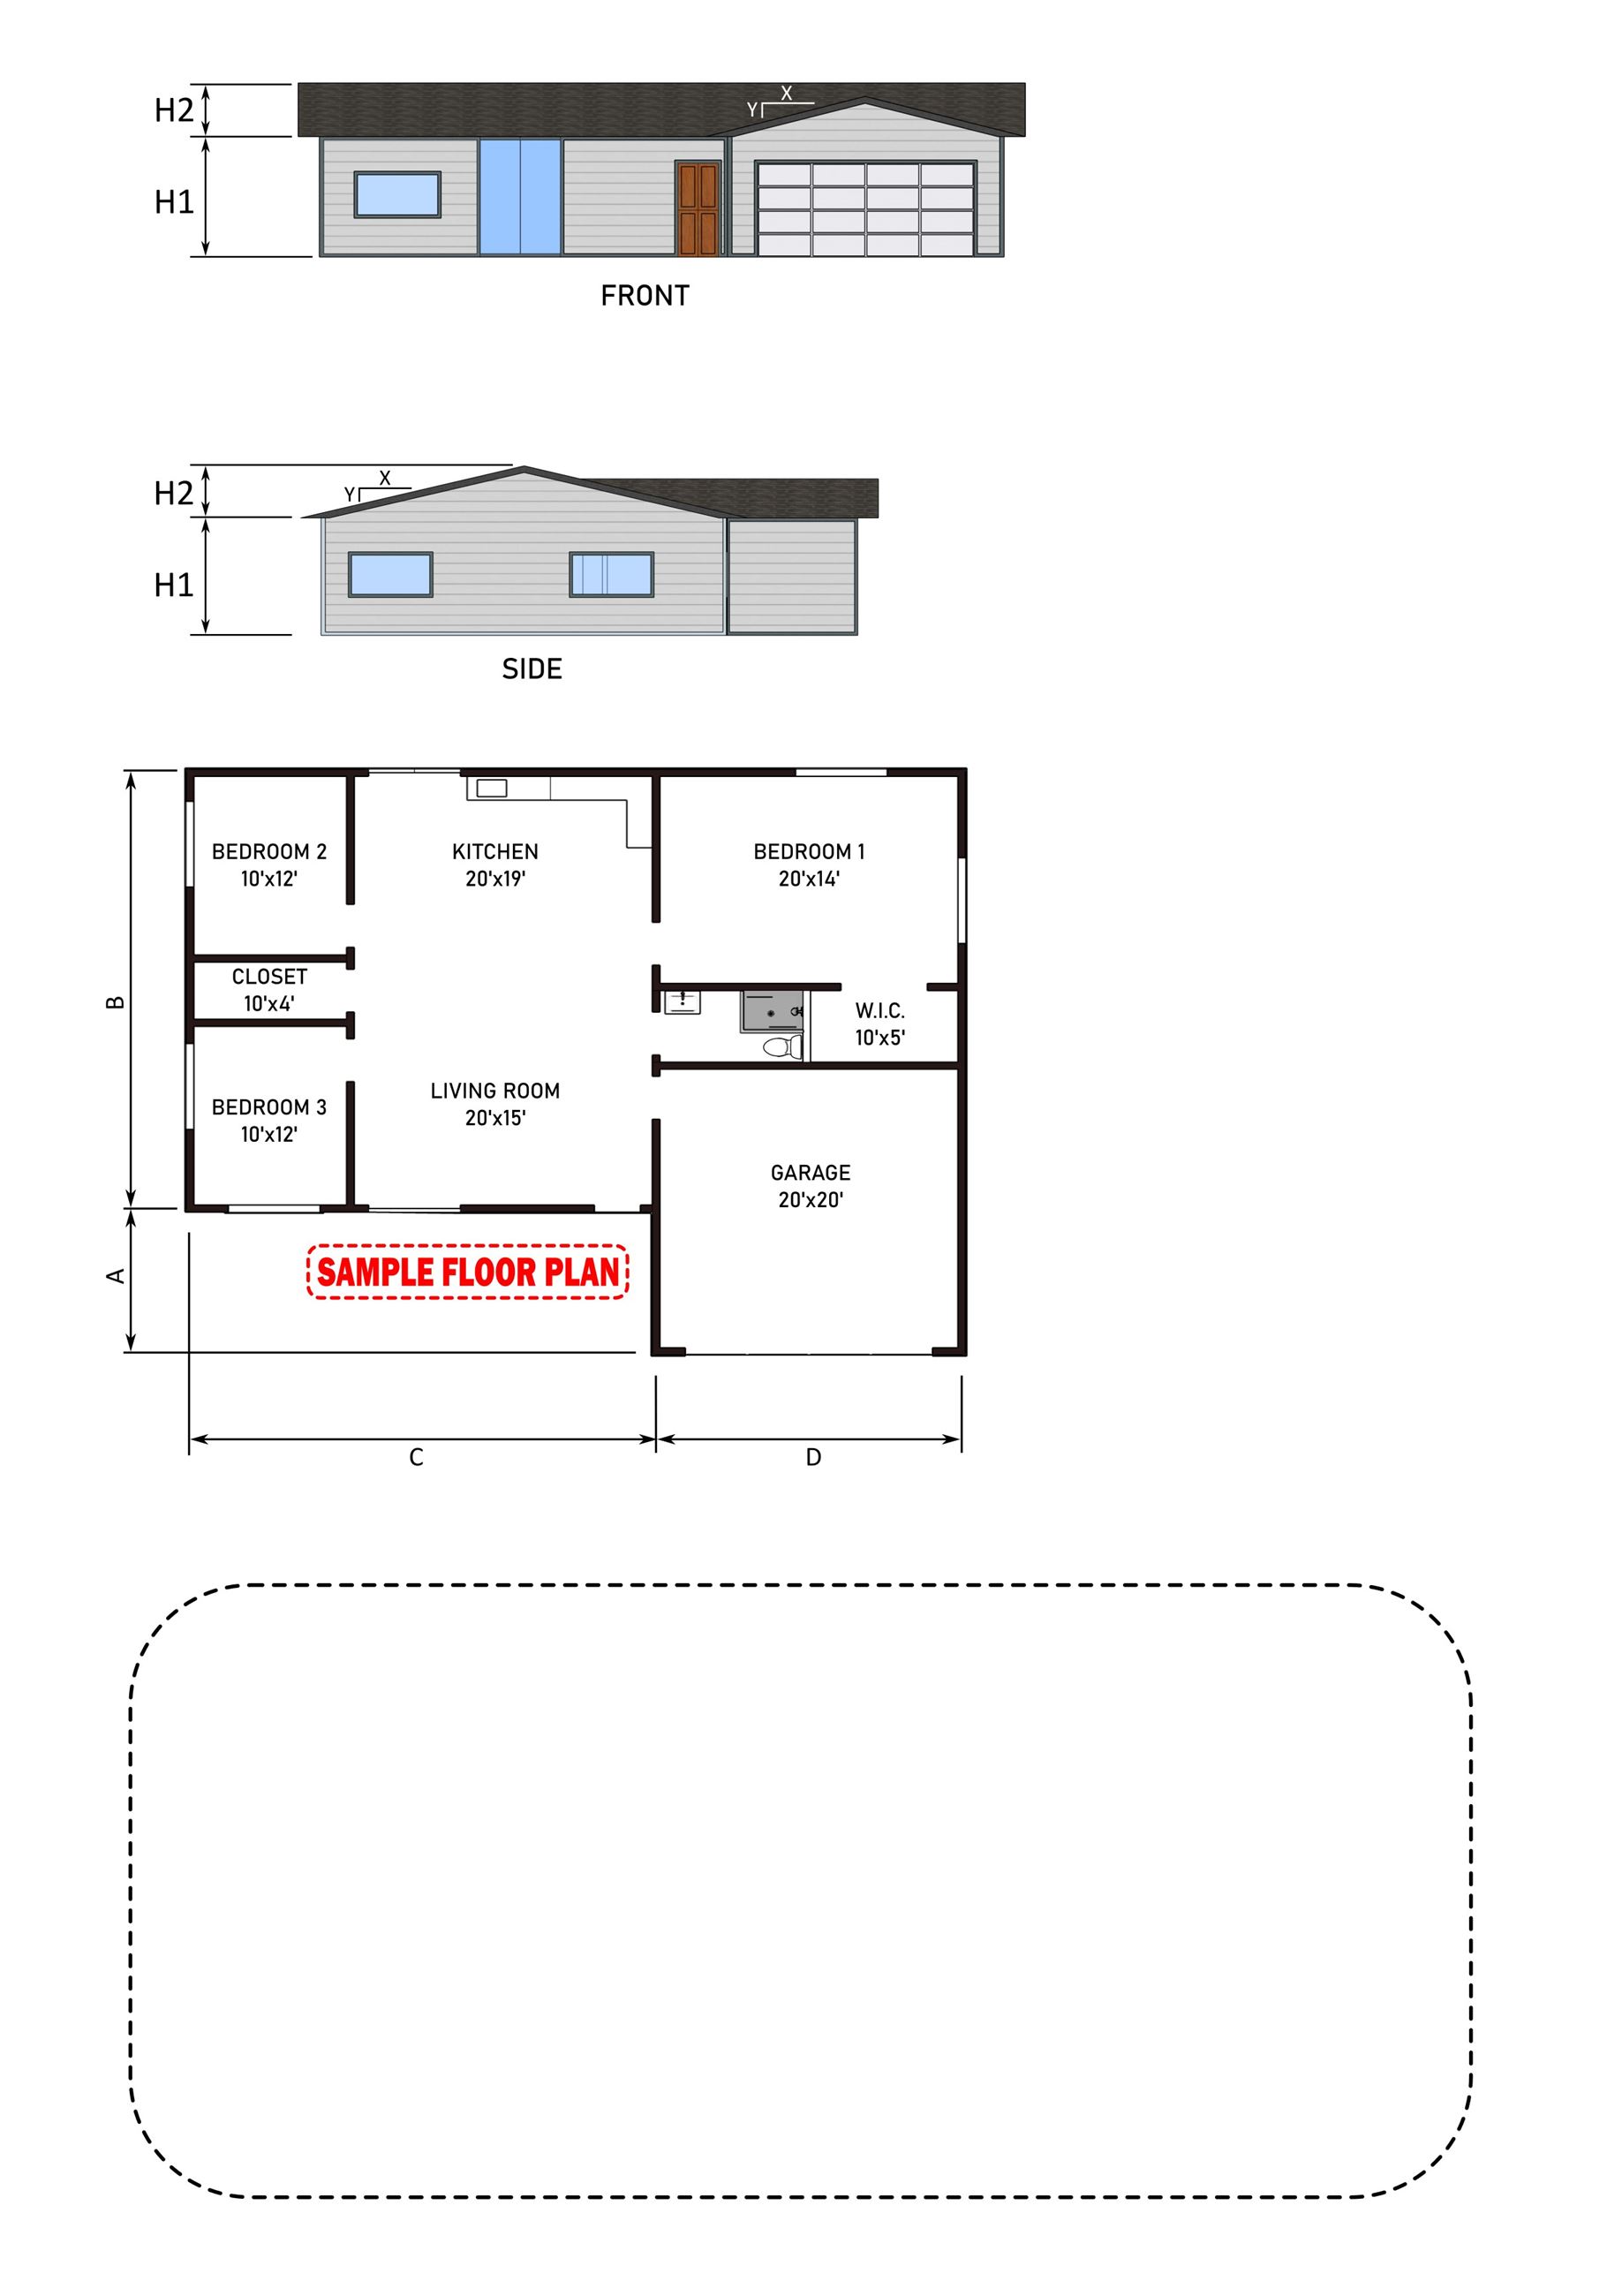 House Floor Plan R2